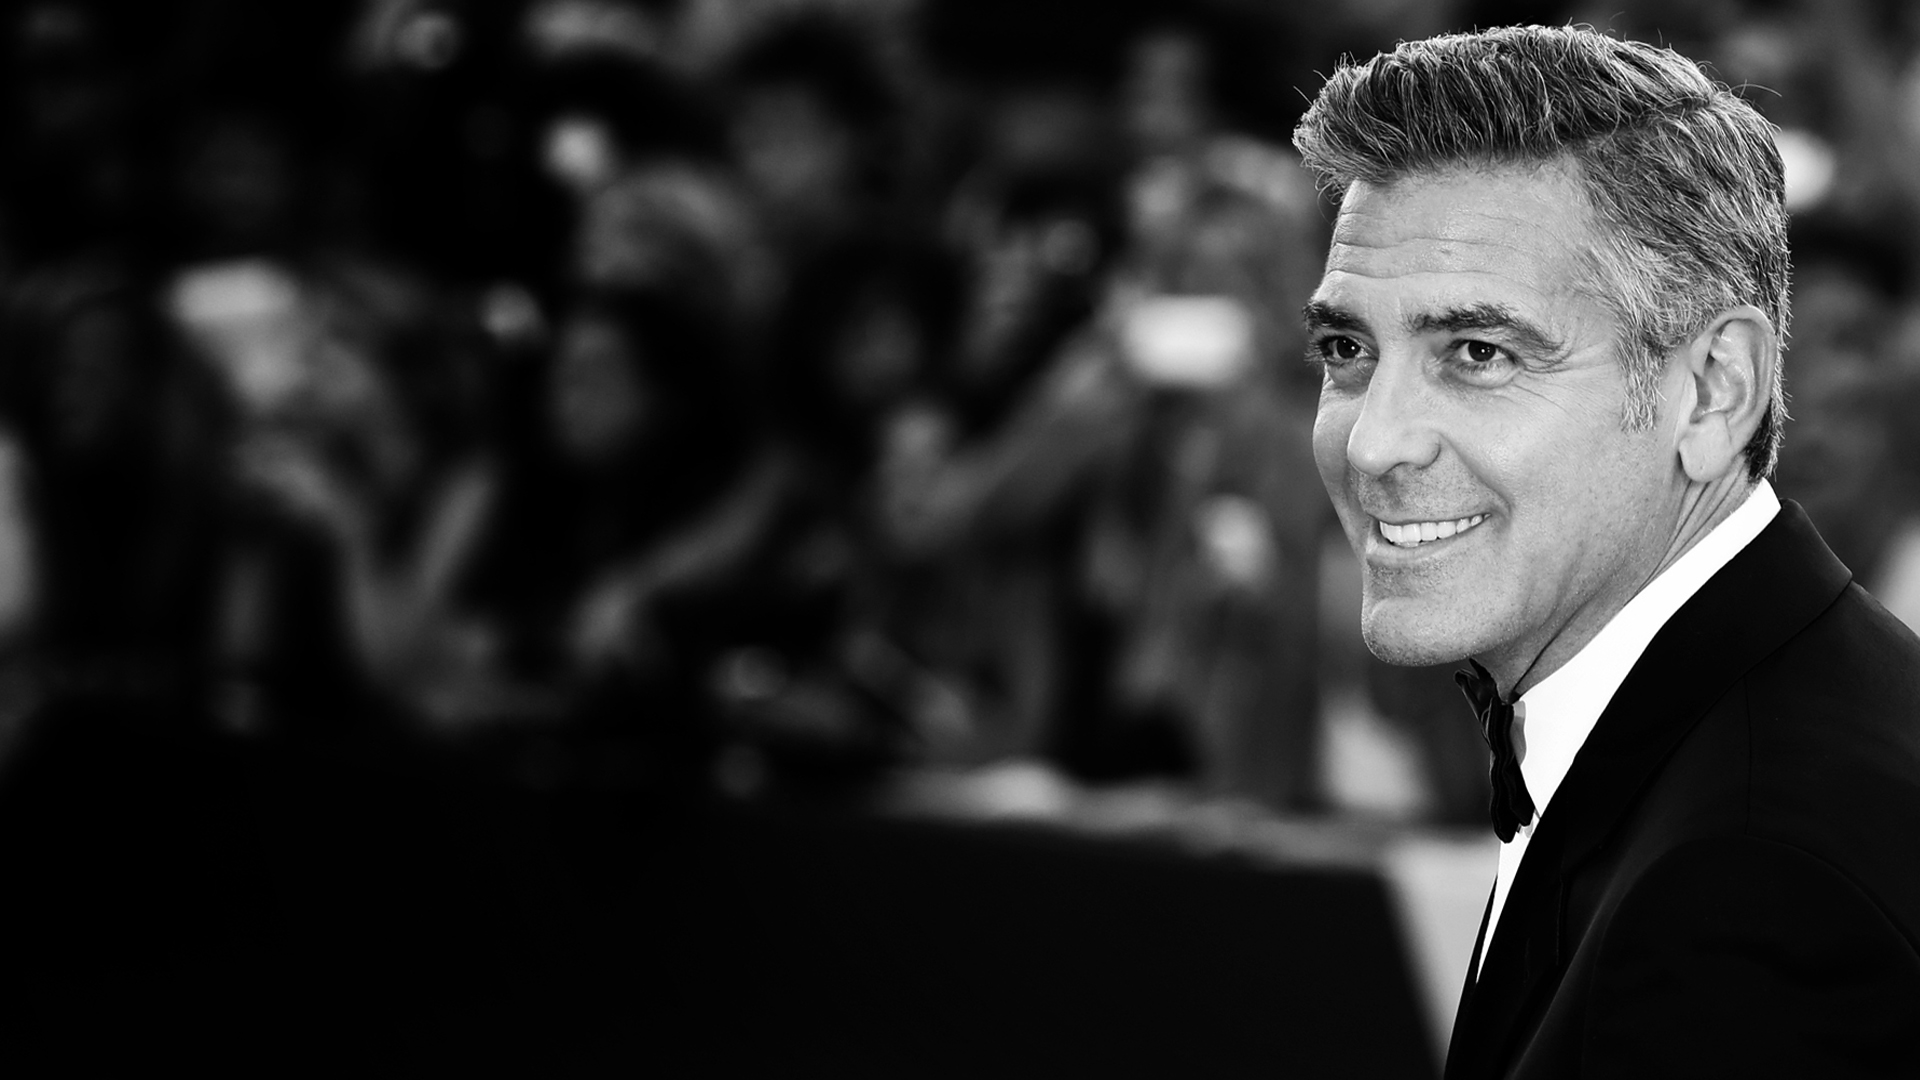 Monochrome George Clooney Smile HD Wallpaper 618 1920x1080 px